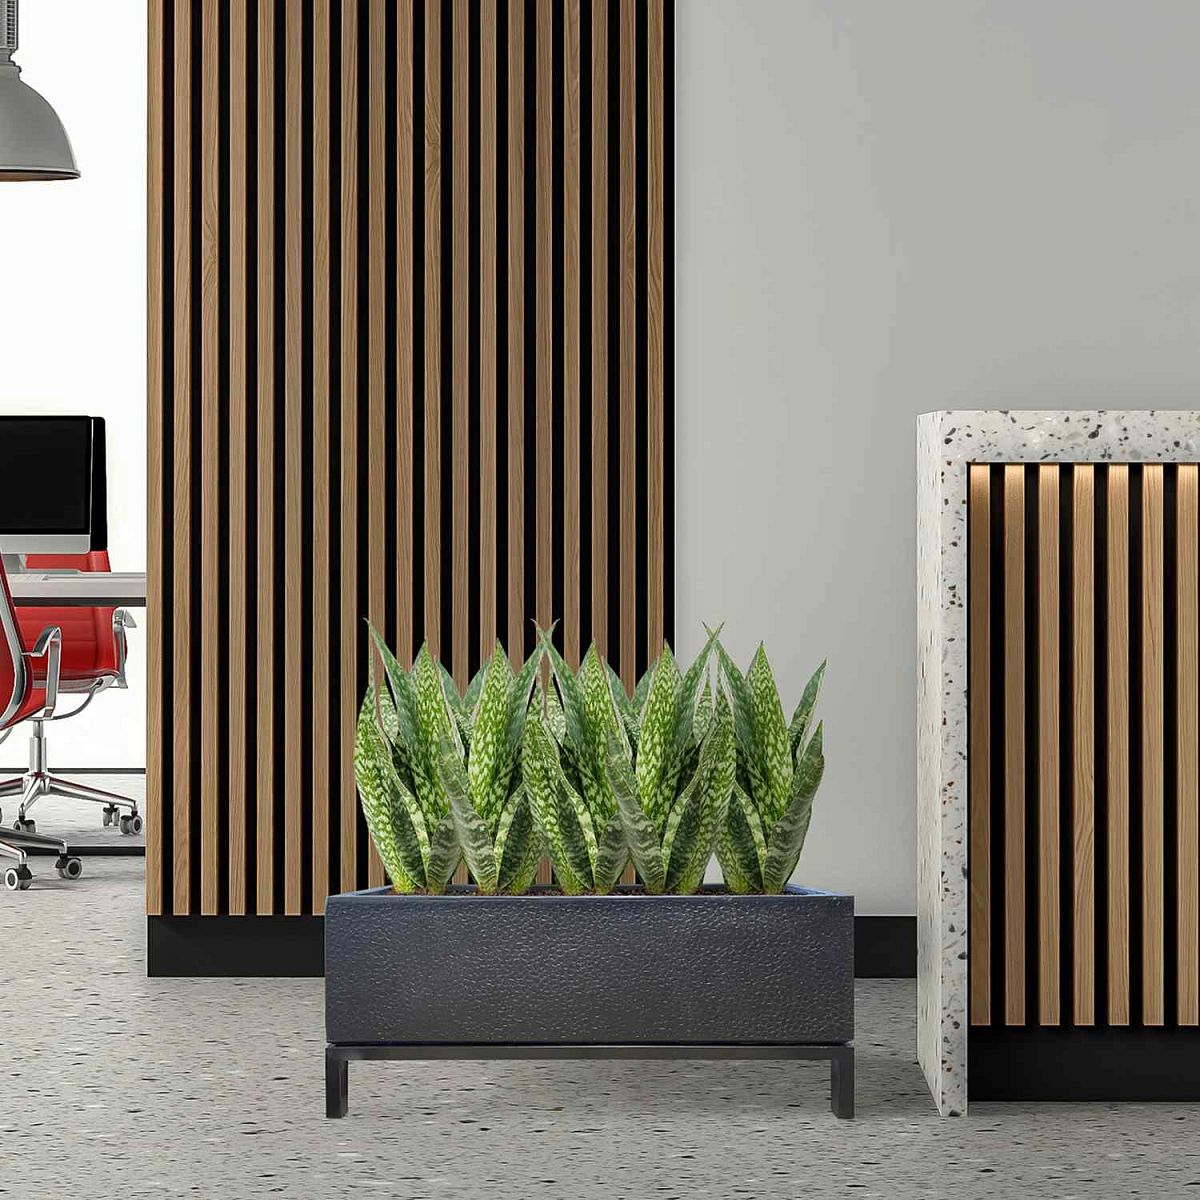 IDEALIST Lite Concrete Style Trough Indoor Planter on Metal Stand